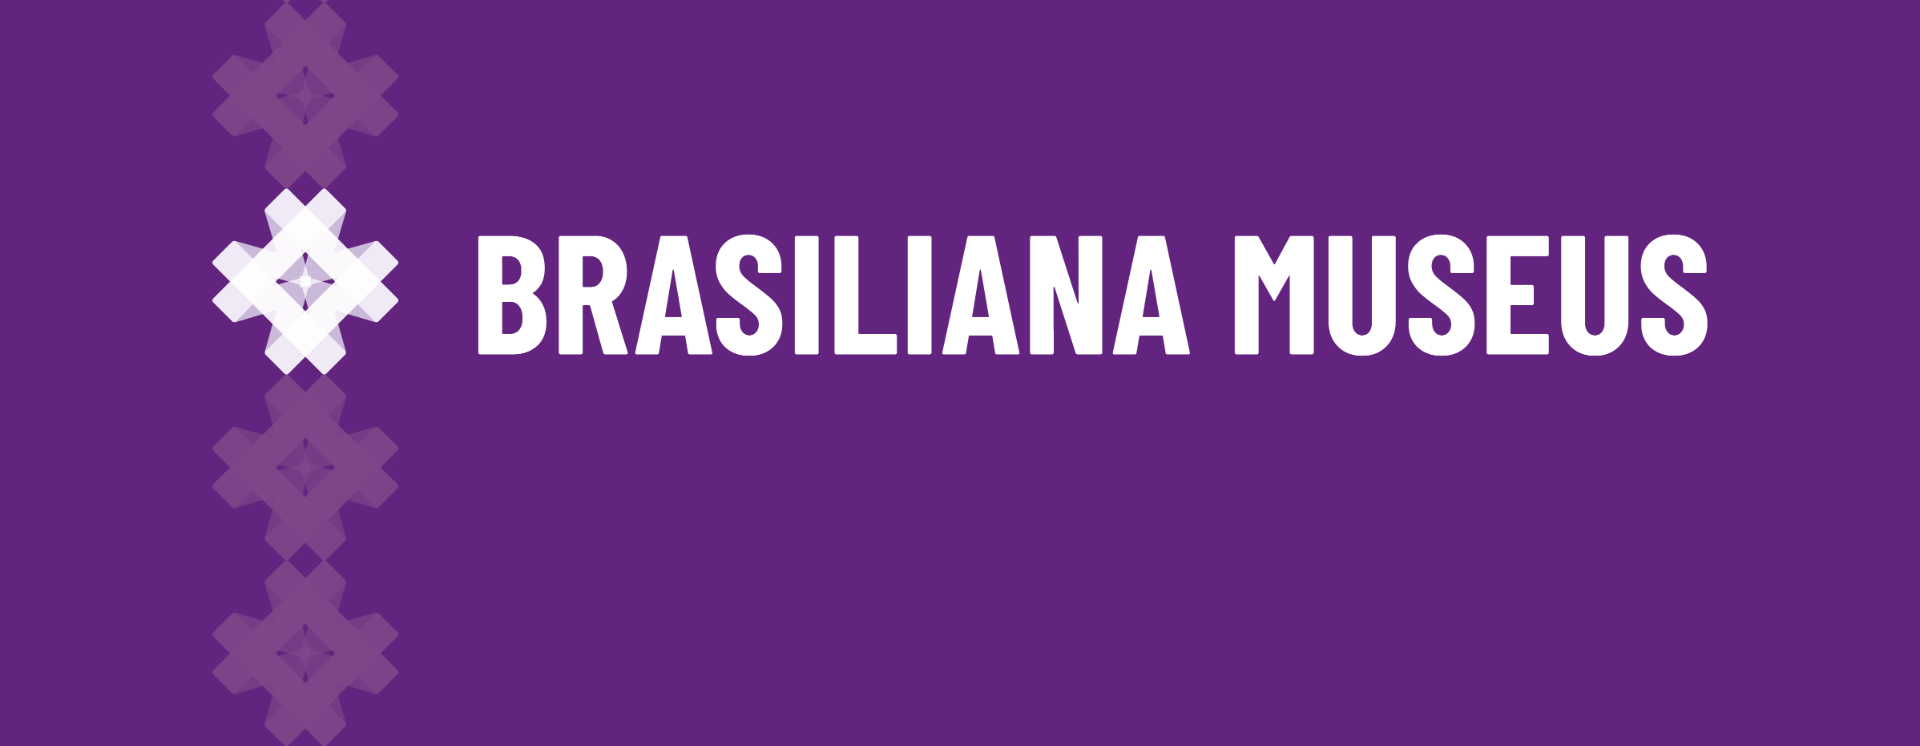 banner-brasiliana.png